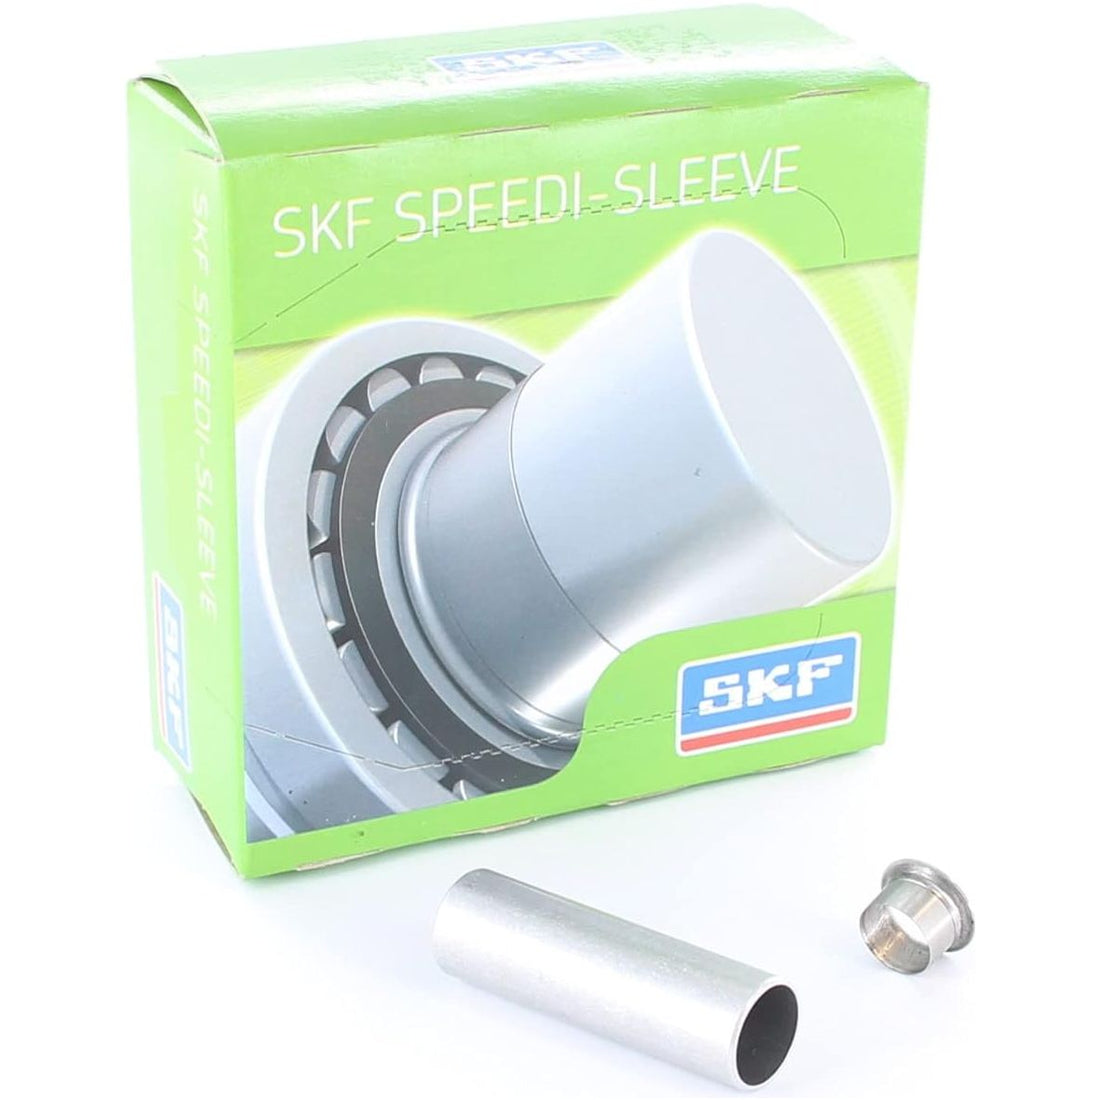 SKF 99082 Speedi Sleeve and Tool Kit, Metric, 18mm Shaft Diameter, 8.00mm Width